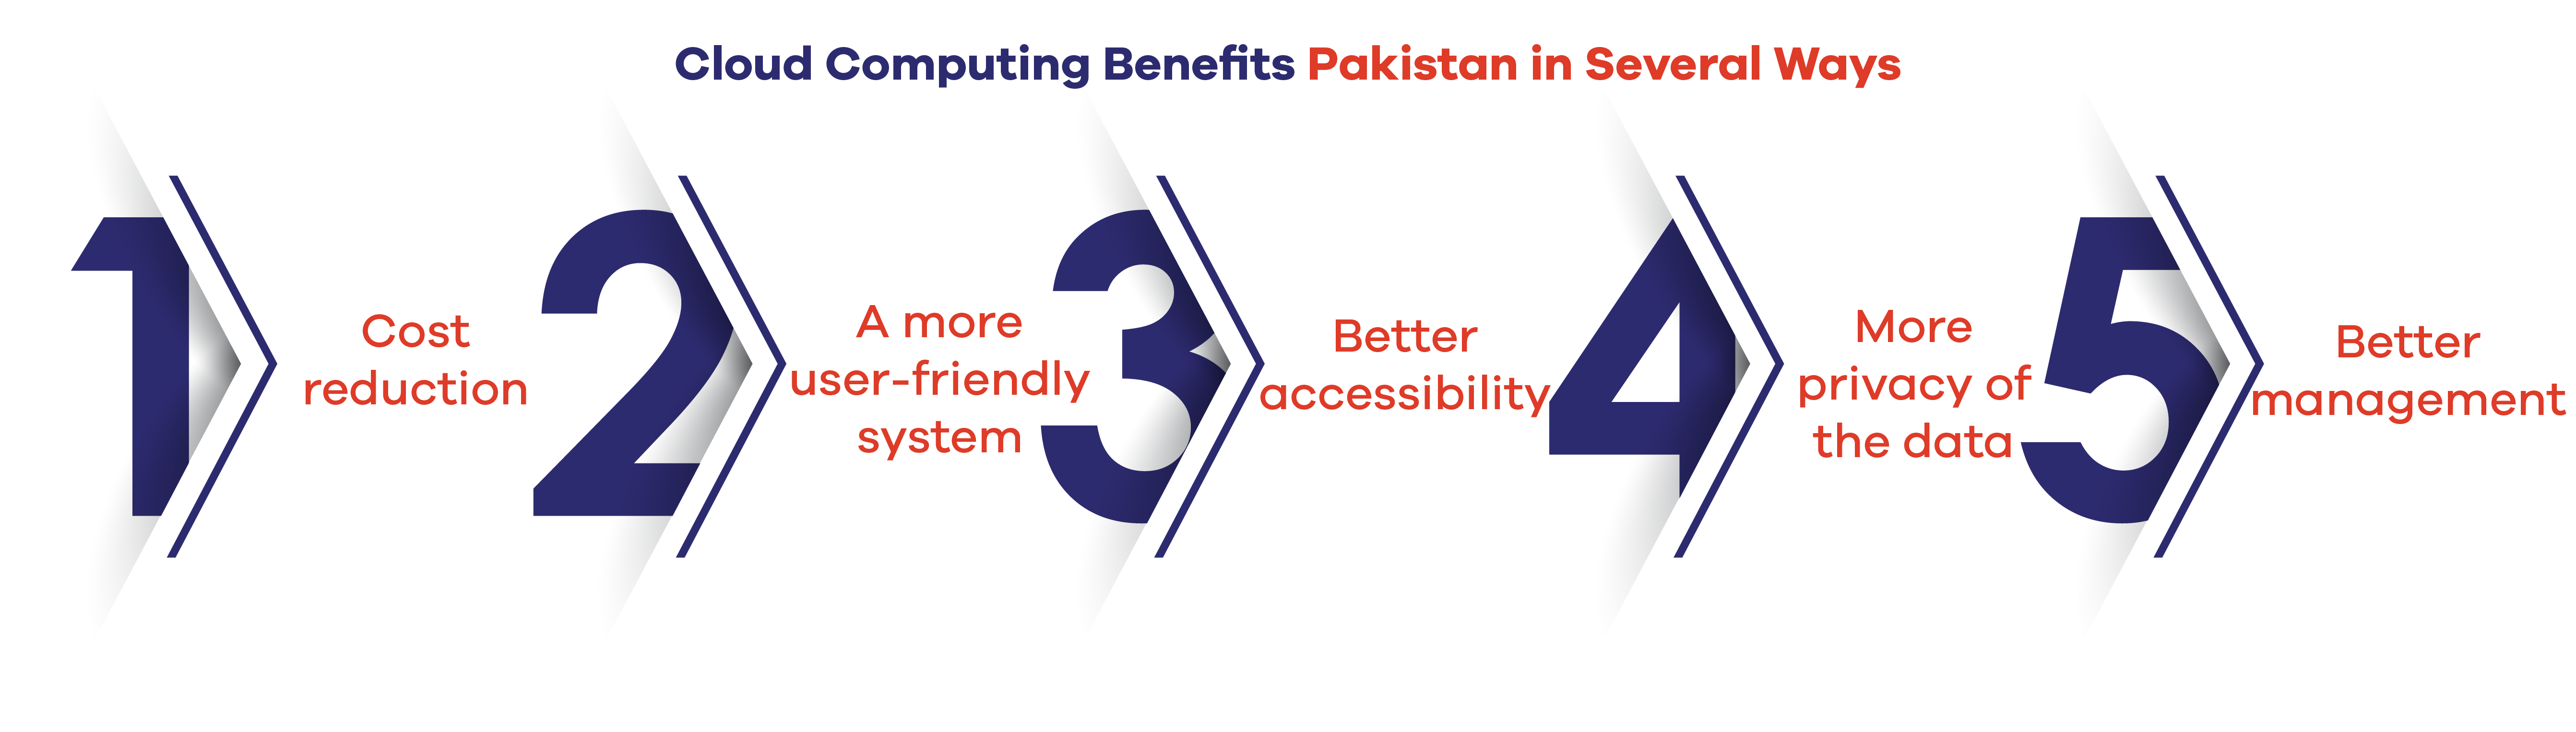 Cloud Computing Benefits Pakistan in Several Ways